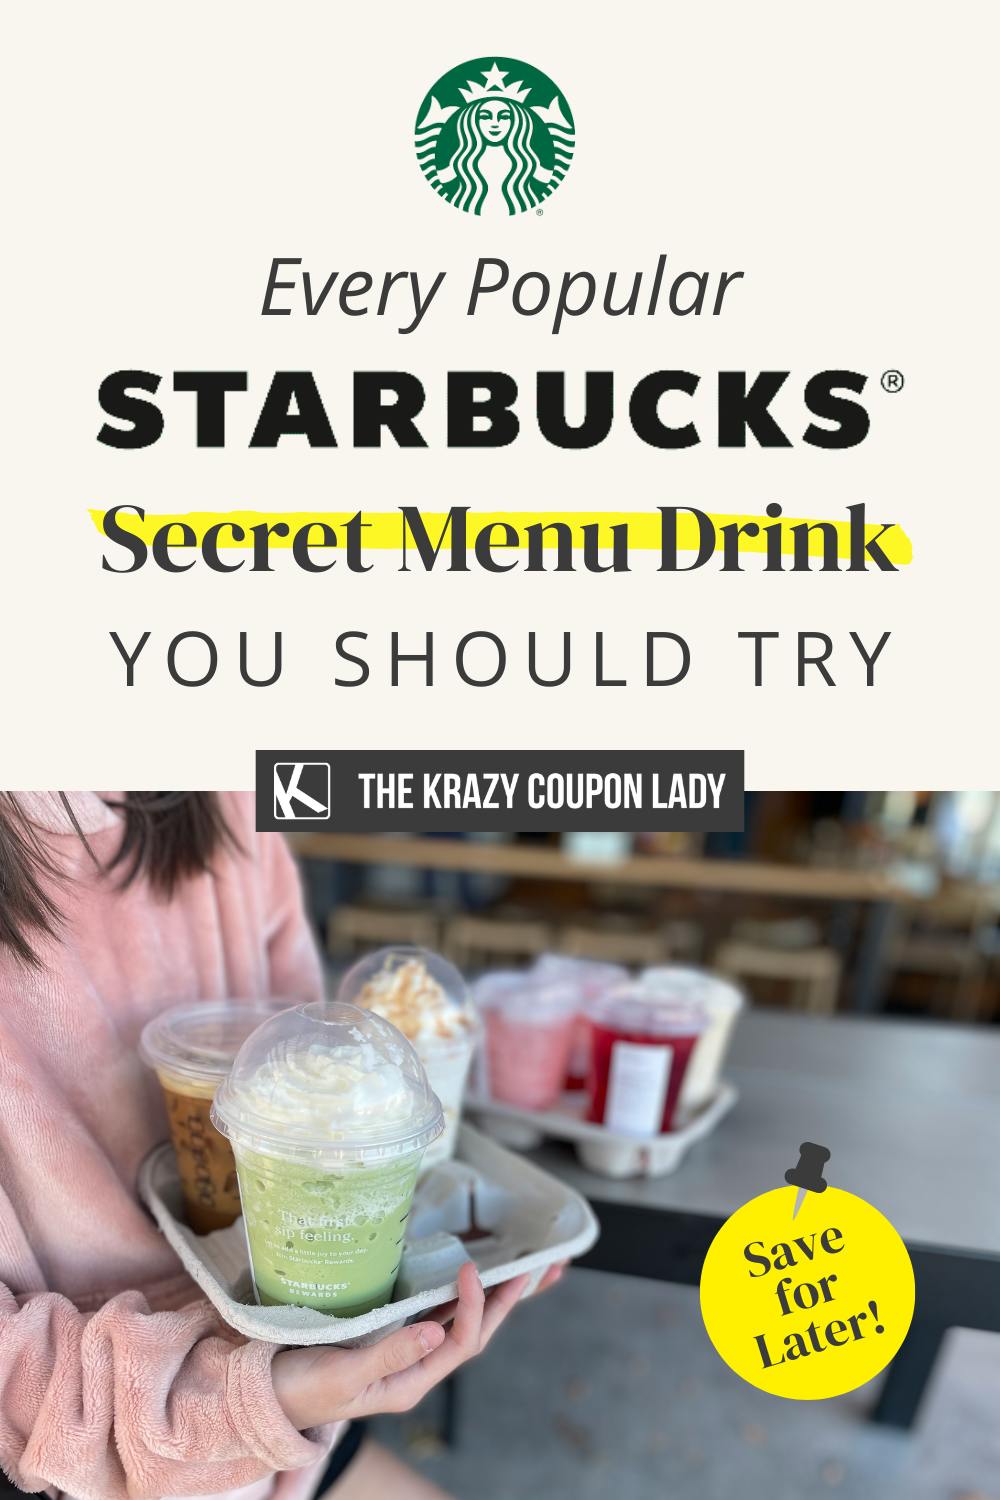 Every Popular Starbucks Secret Menu Drink You Should Try